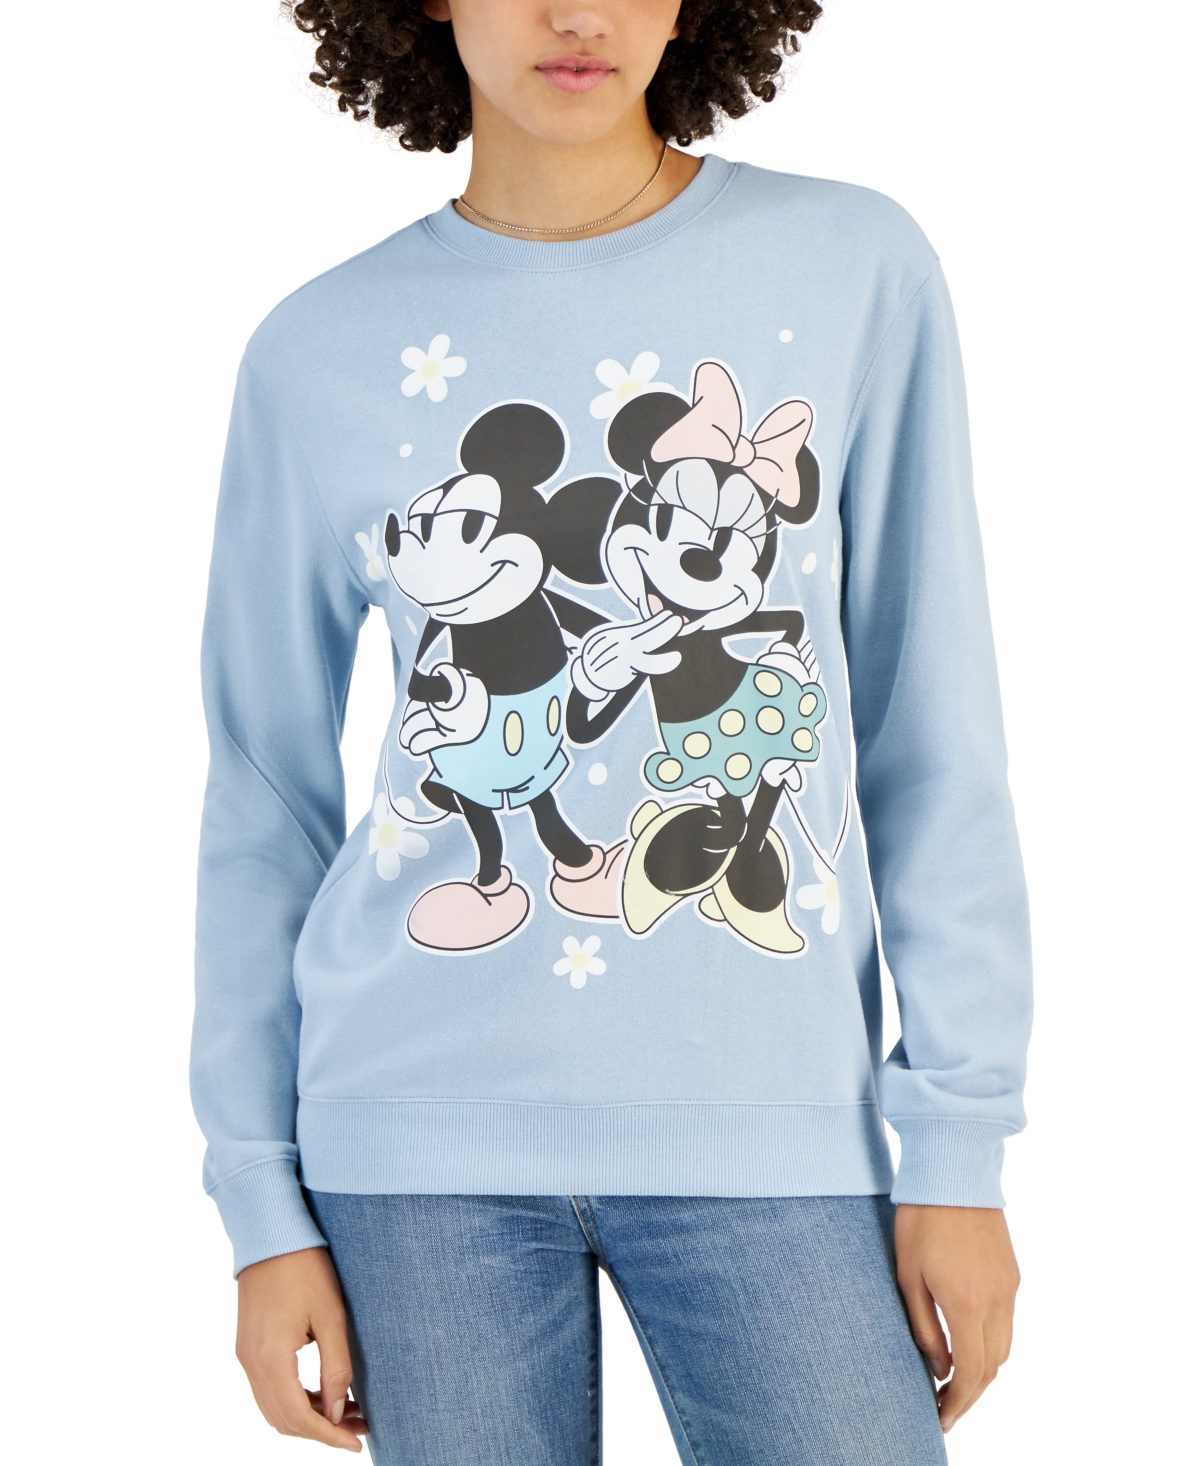 Juniors' Mickey & Minnie Mouse Graphic Print Sweatshirt - Celestial Blue